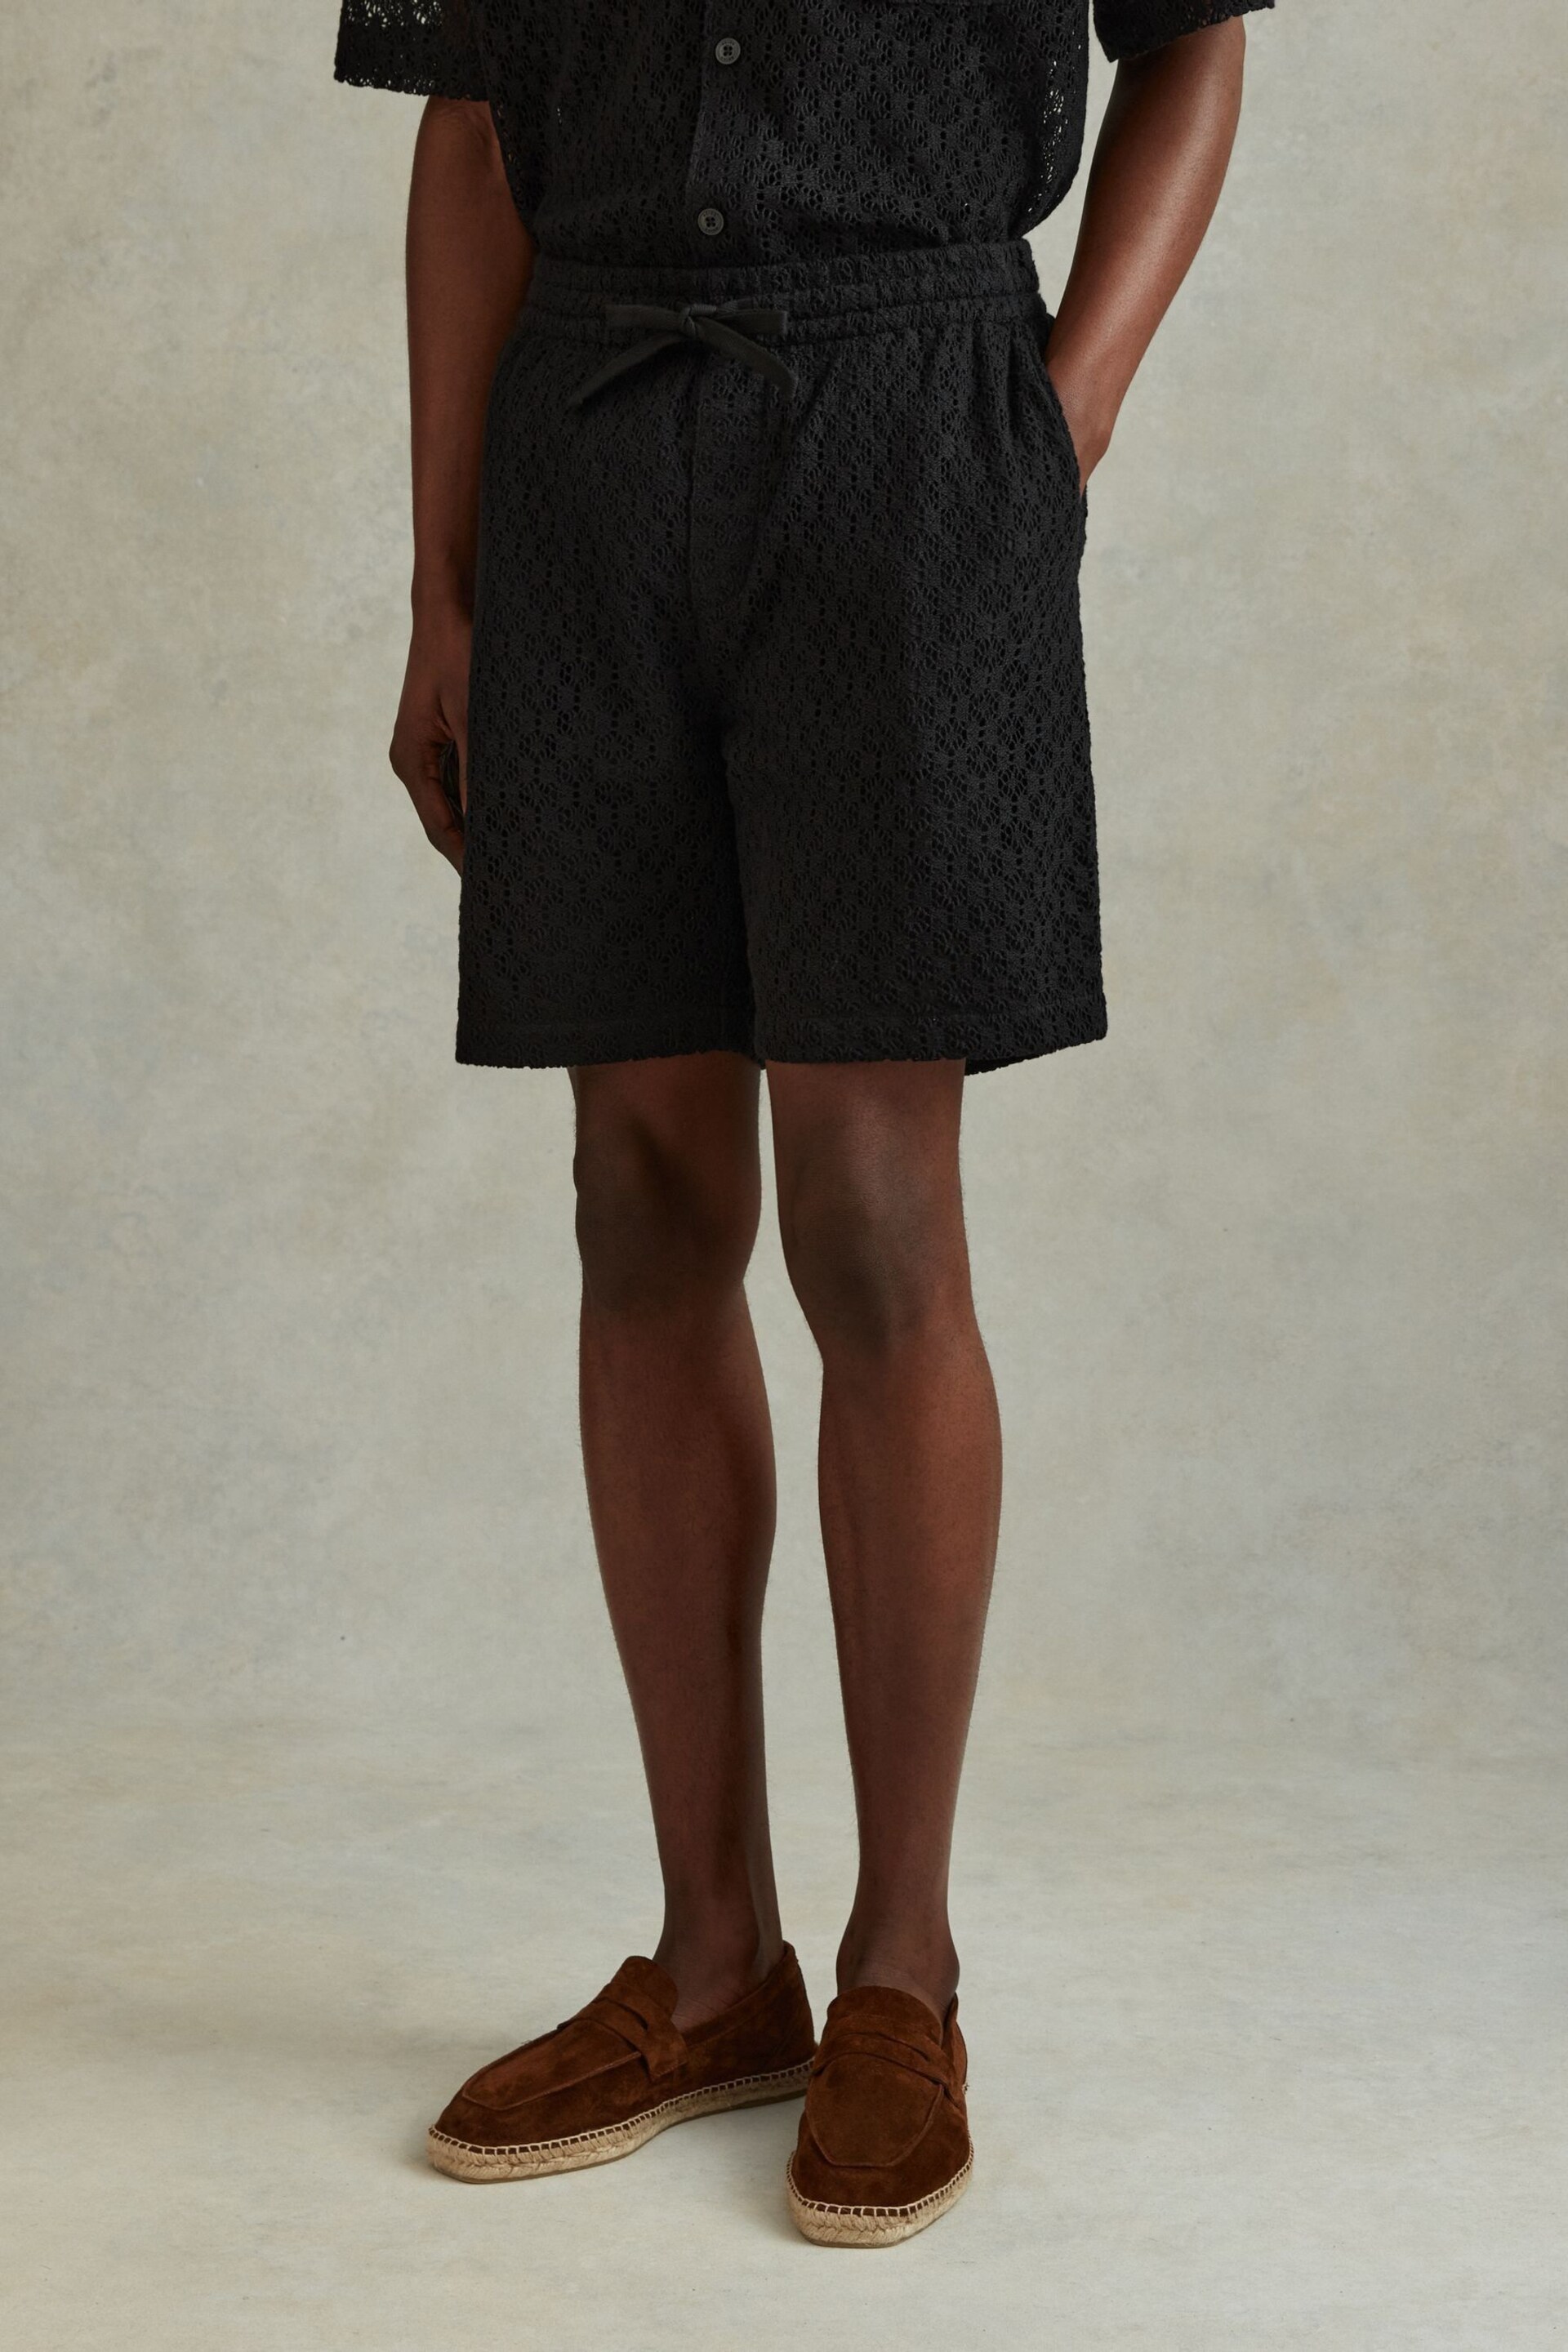 Reiss Black Prez Cotton Blend Crochet Drawstring Shorts - Image 3 of 6